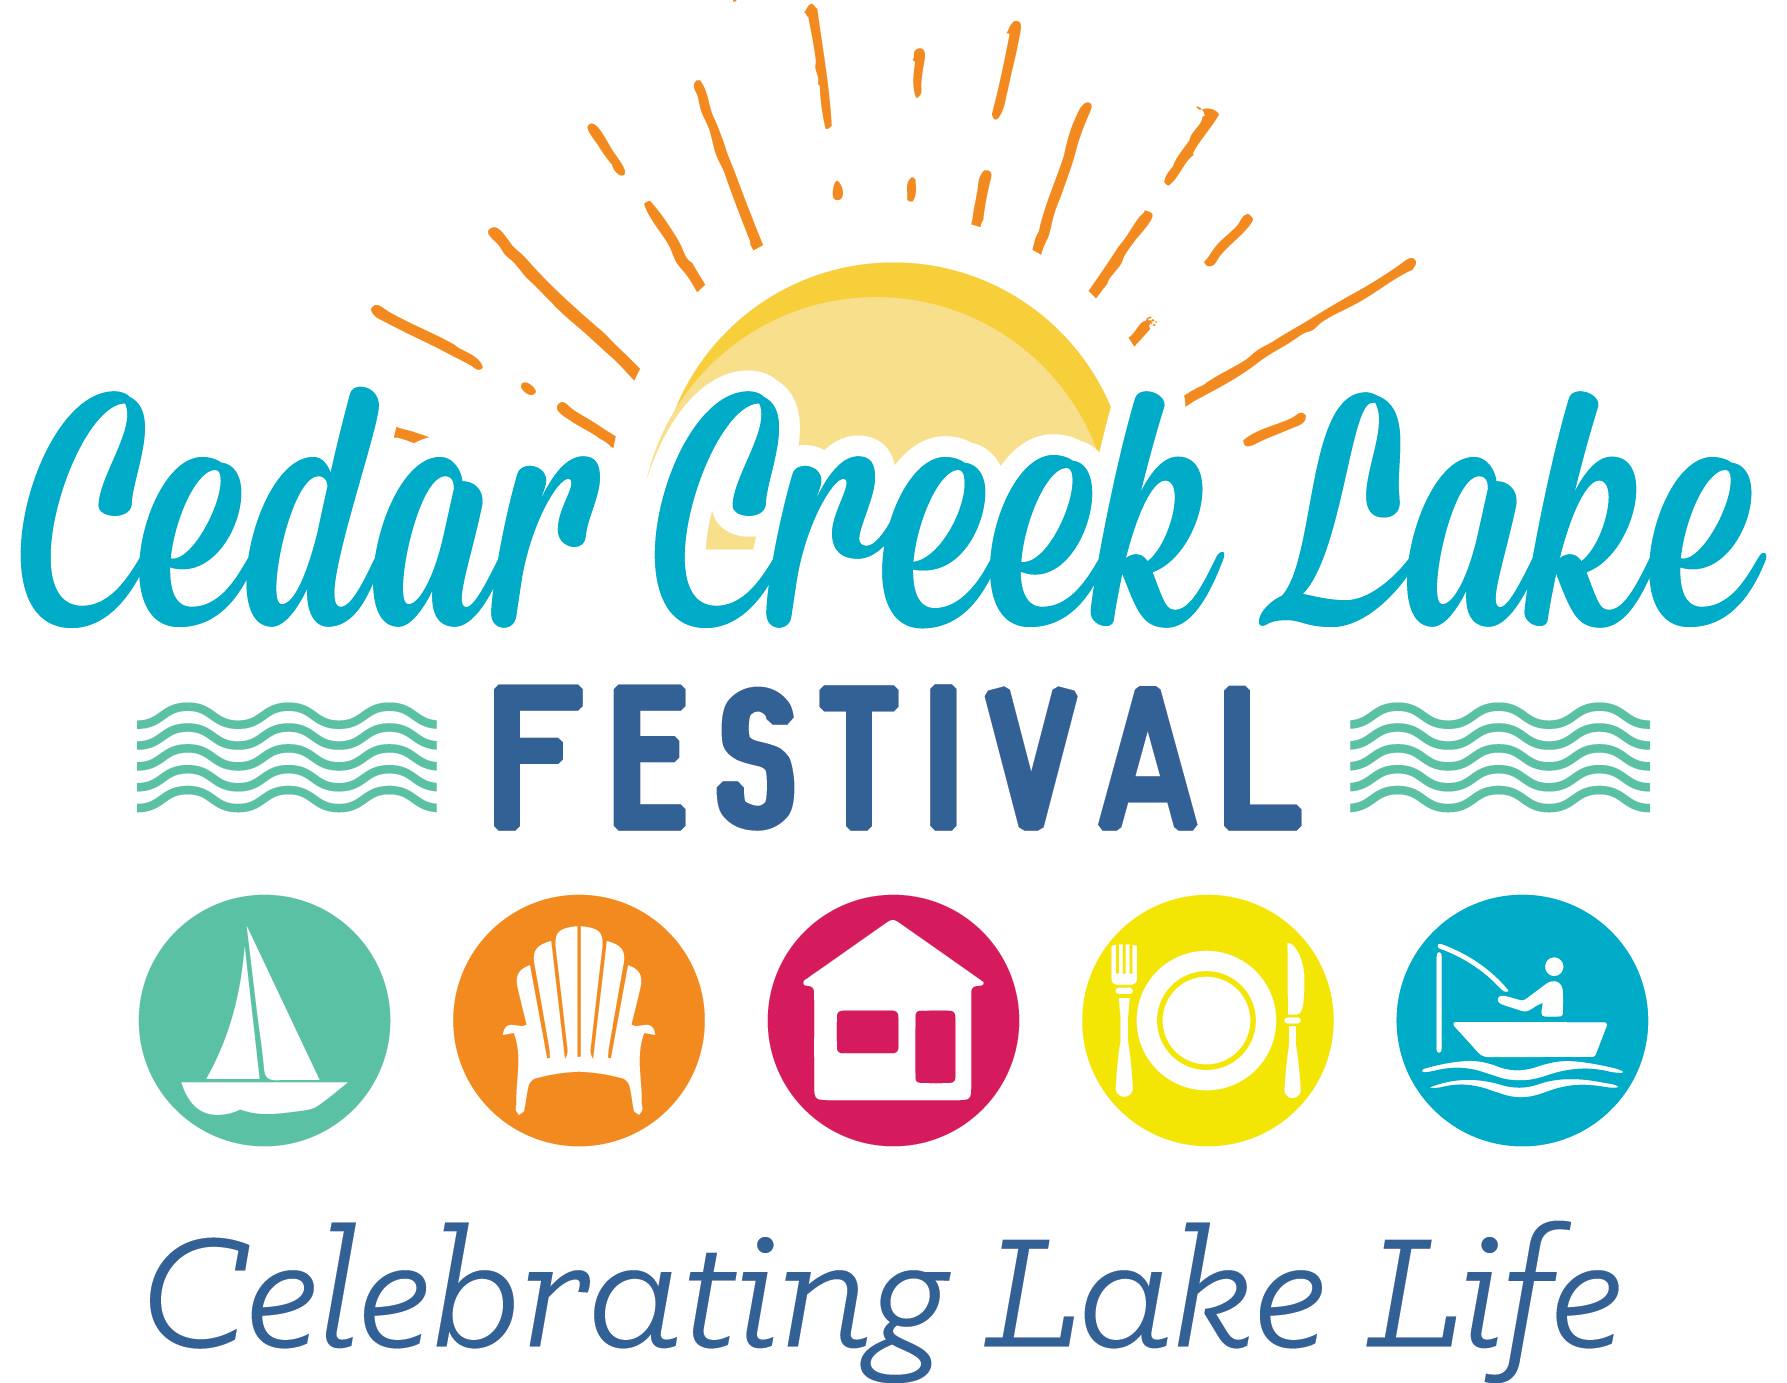 Cedar Creek Lake Festival 1 Cedar Creek Festival CedarCreekLake.Online